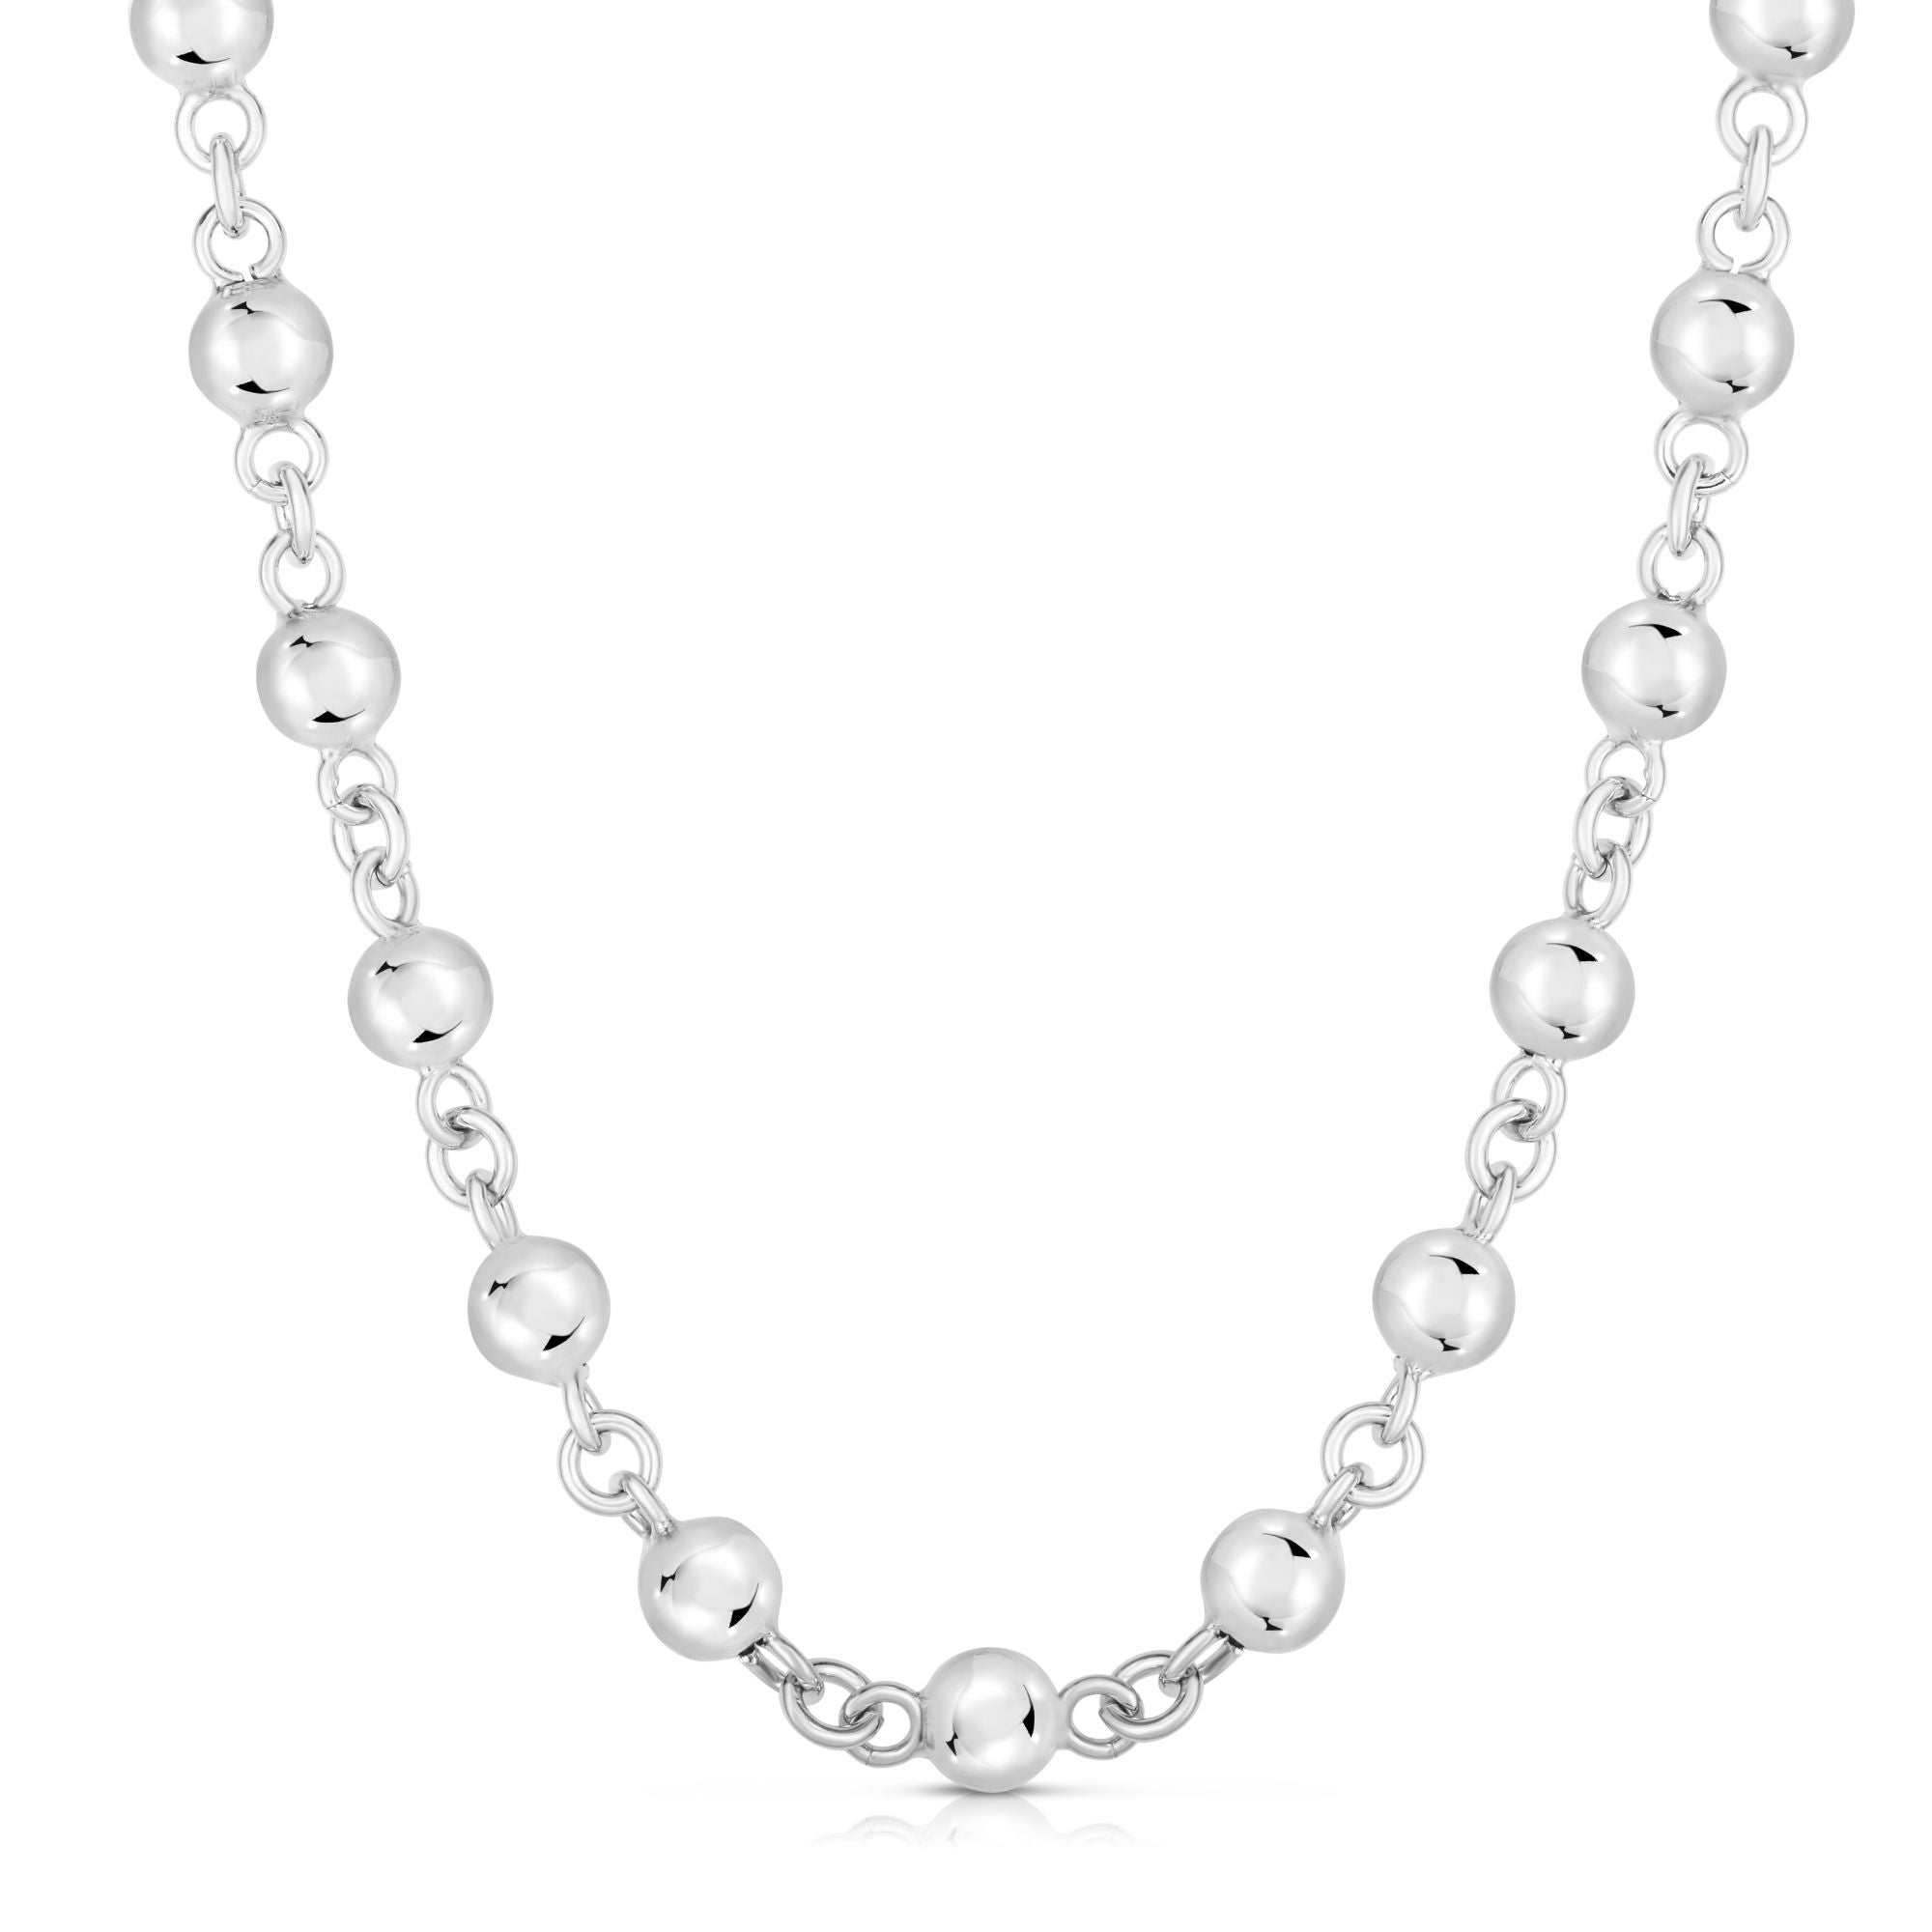 Sterling Silver Balls And Links Women's Bracelet, 7.5" fine designer jewelry for men and women